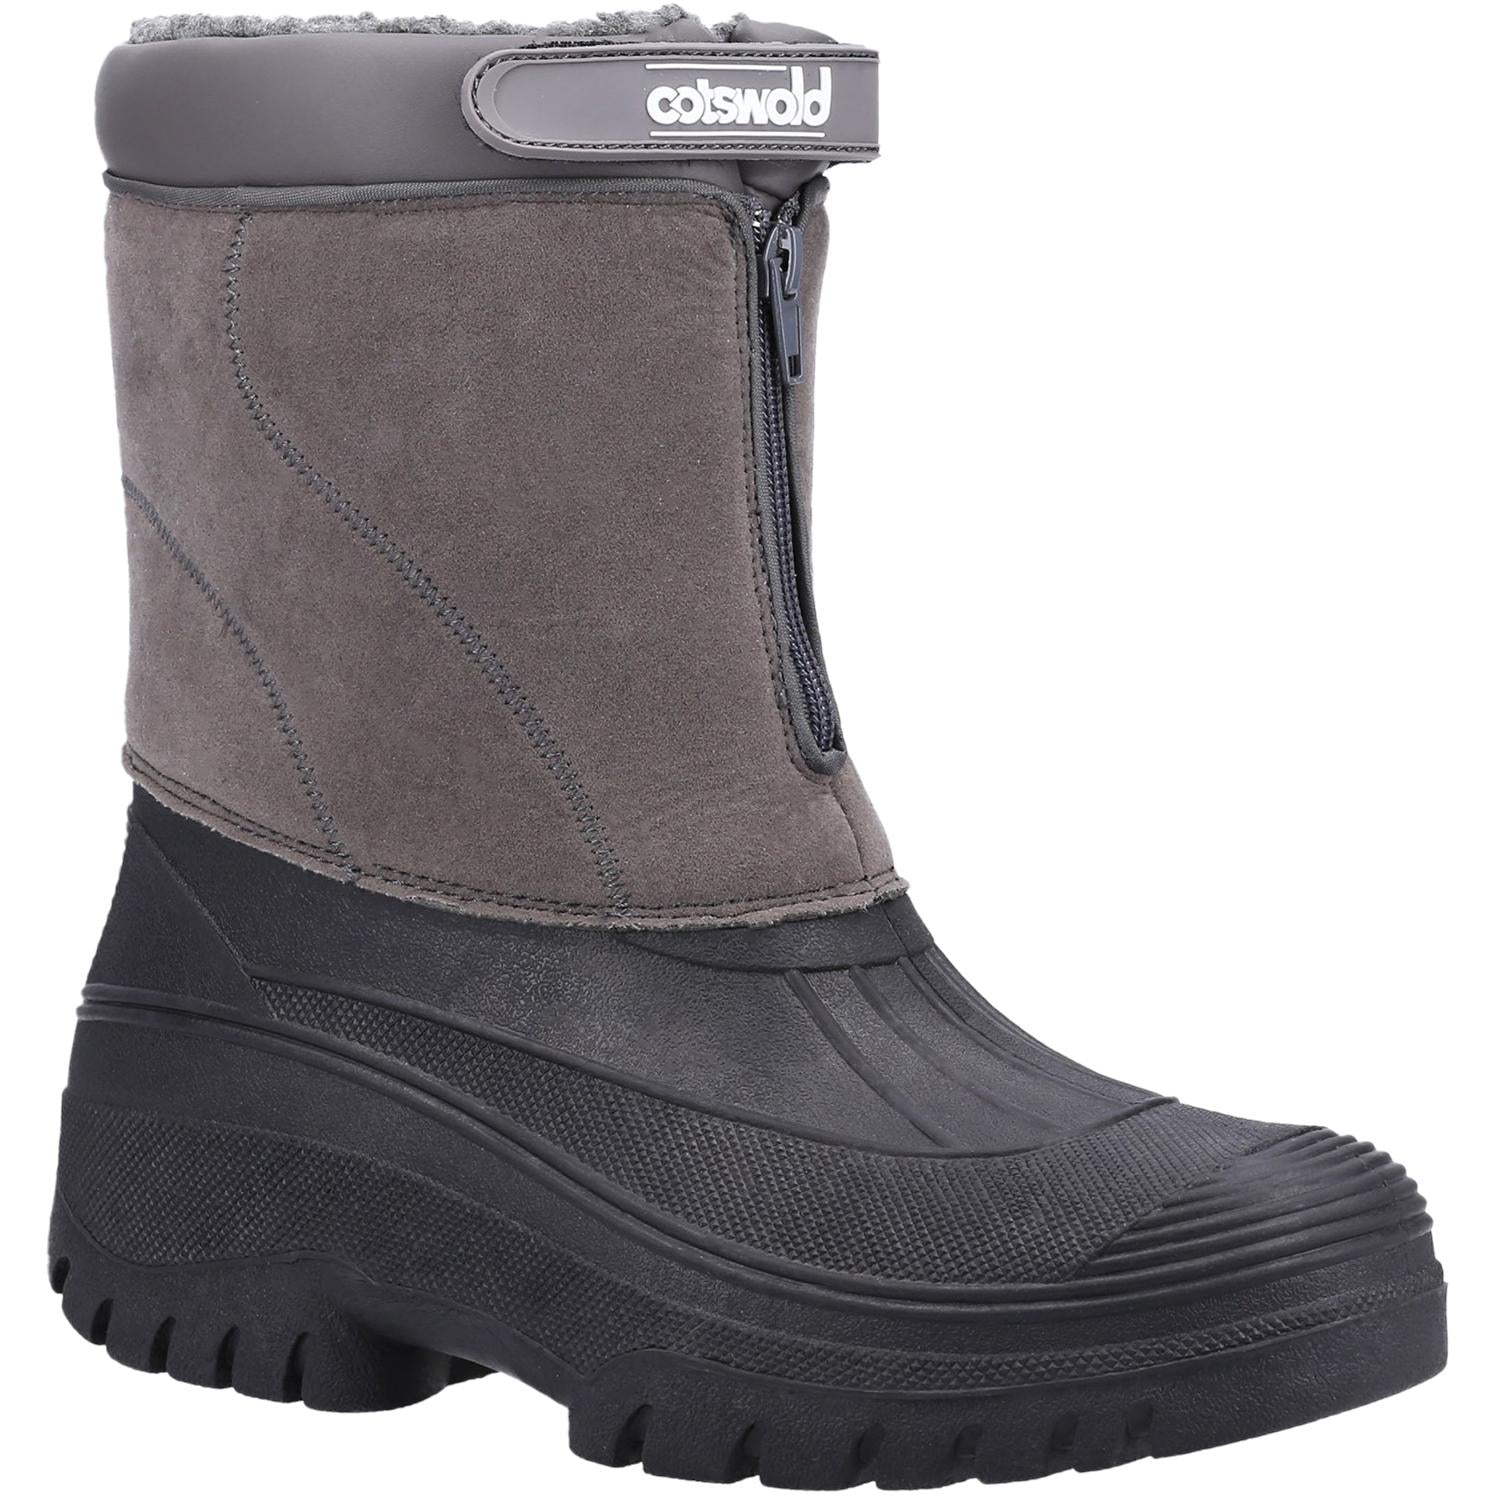 Miscellaneous Other Venture Waterproof Winter Boot